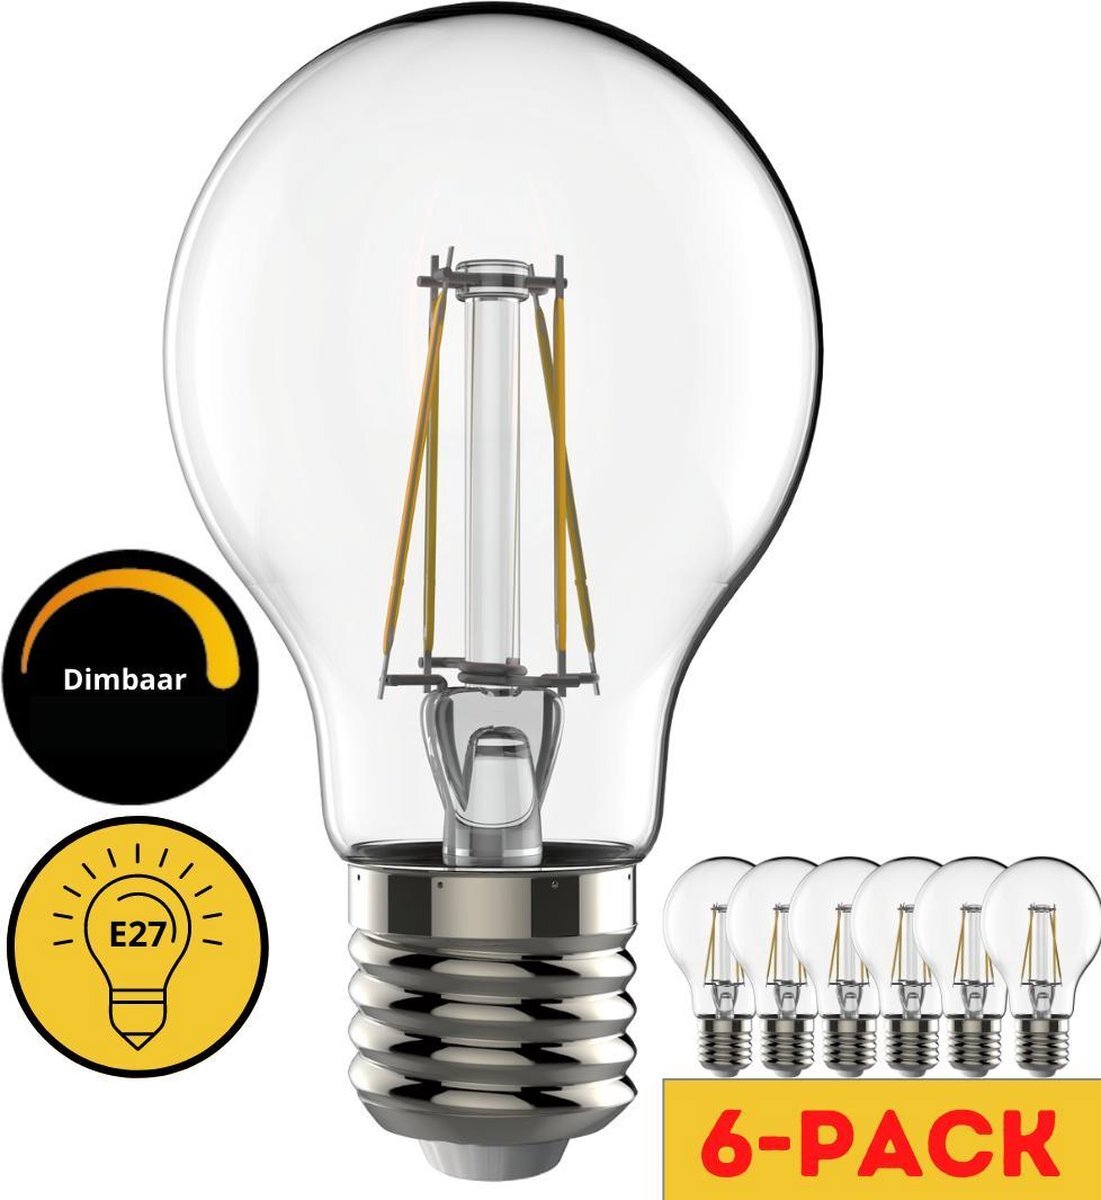 Proventa Dimbare LED filament lamp - E27 fitting - Stralingshoek van 360° - 6-pack led lampen